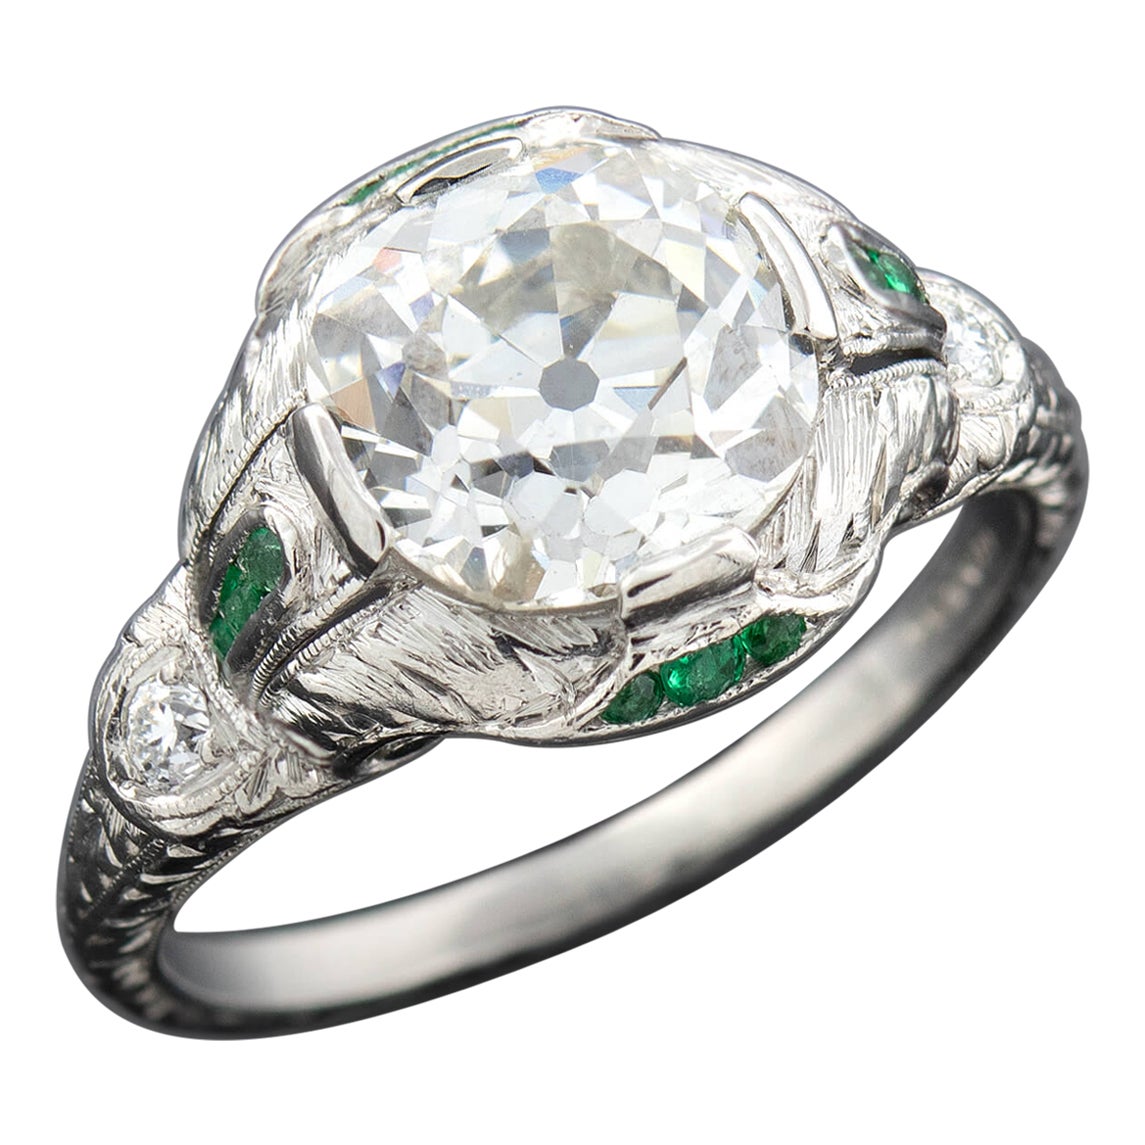 Art Deco Platin Diamant + Smaragd Verlobungsring 2,36ctw Zentrum